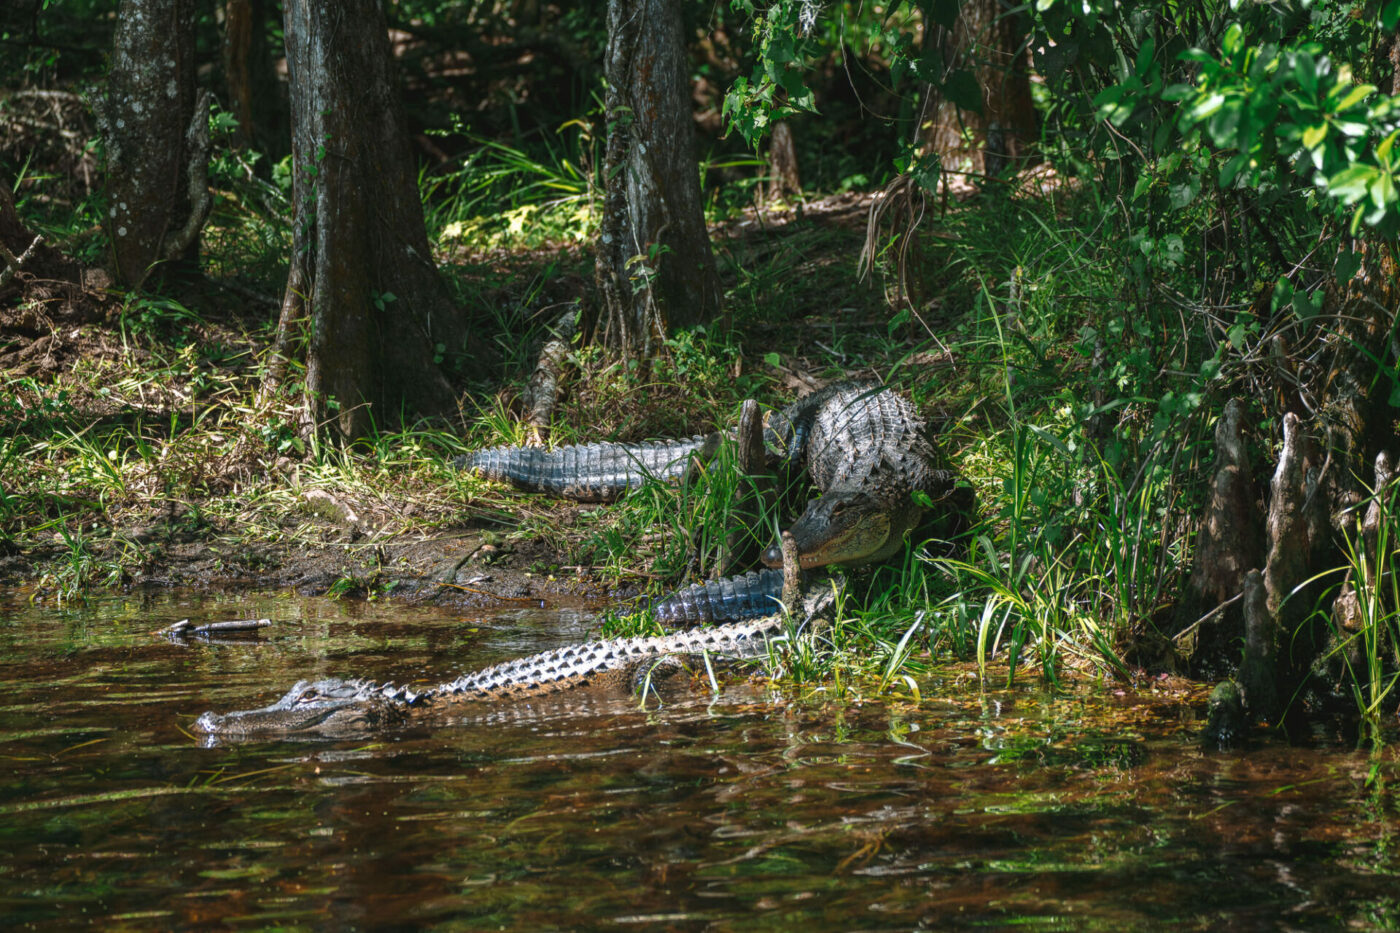 Crocodiles spotted at Wakulla Springs